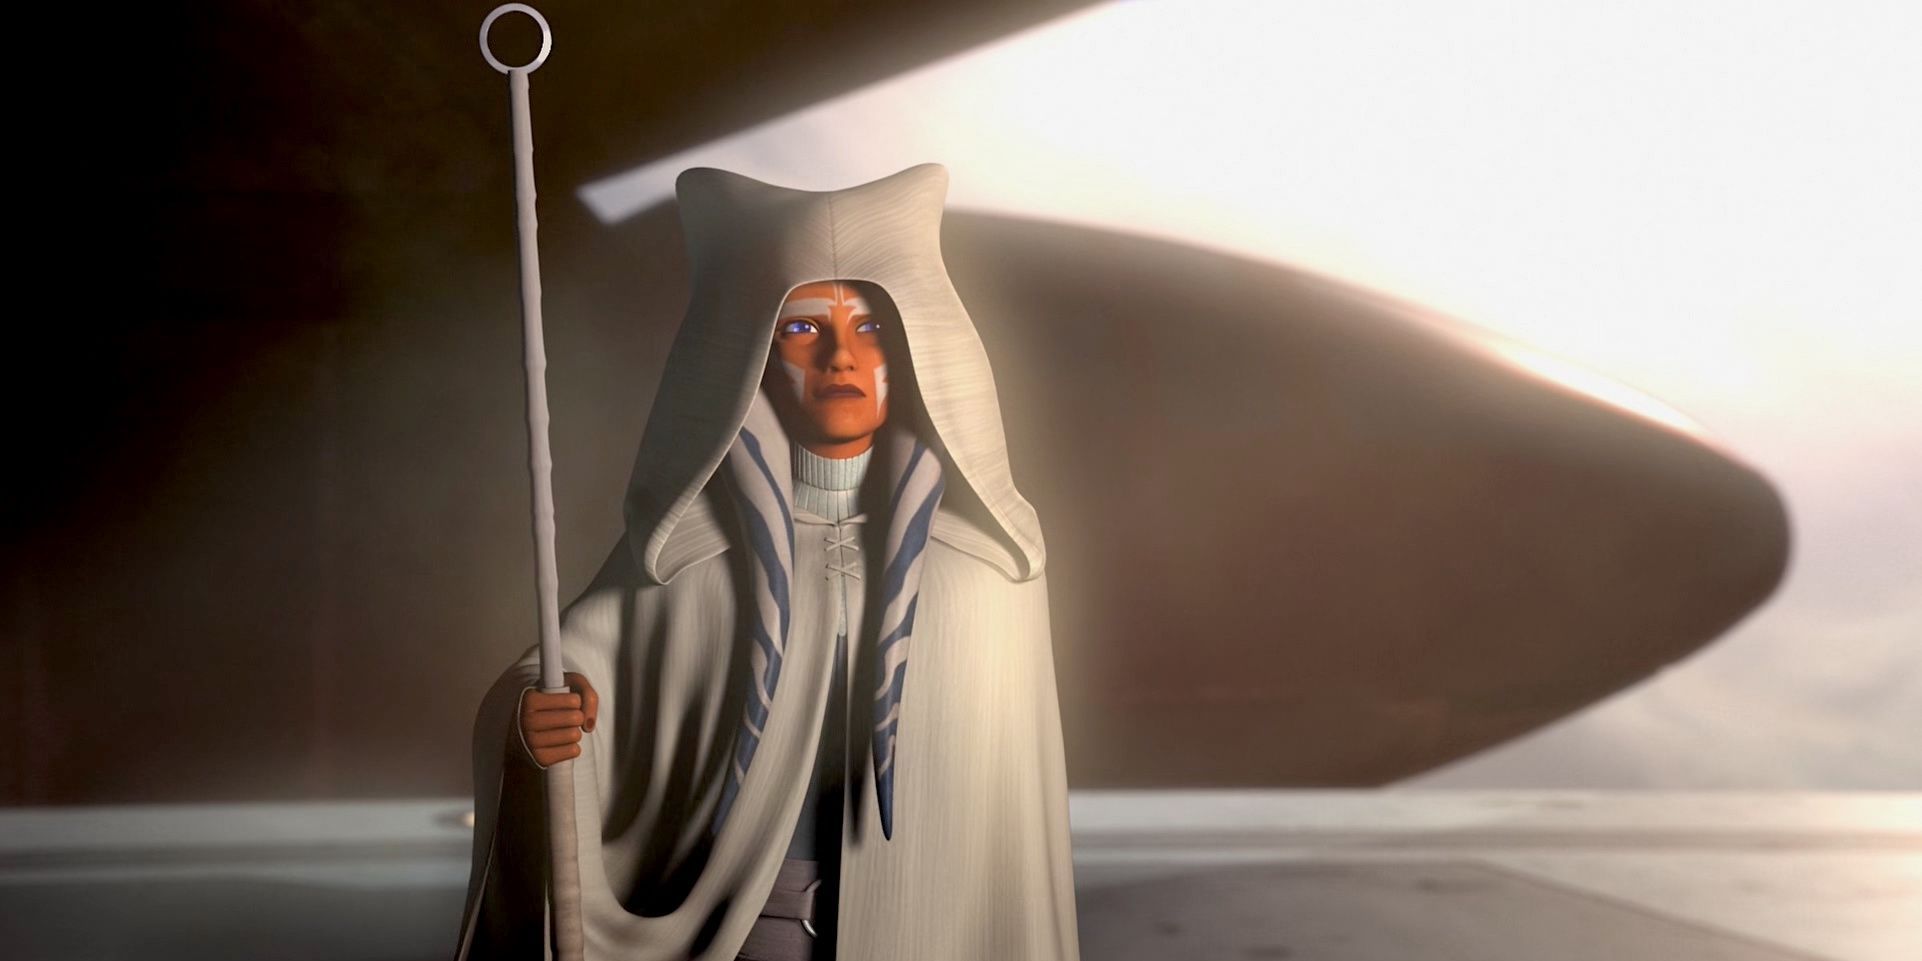 Ahsoka in her grey Jedi robe, fares the Phoenix Squadron farewell in Star Wars Rebels